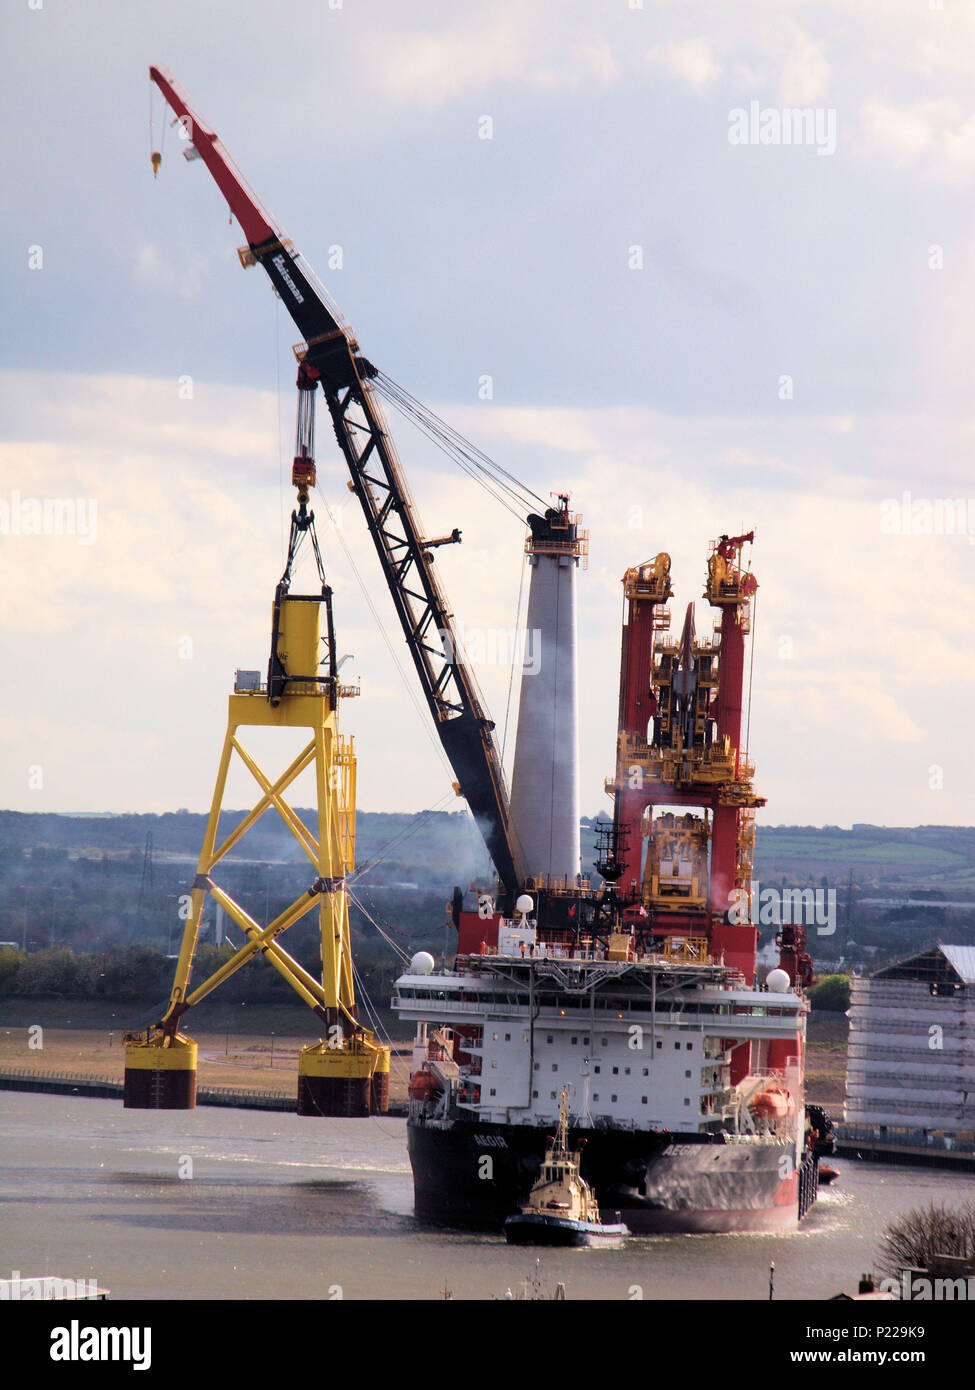 The 50228tonnes Heerema 'Aegir' subsea heavy lift construction vessel transporting a wind turbine jacket (Legs)  upon the river Tyne, UK. Stock Photo